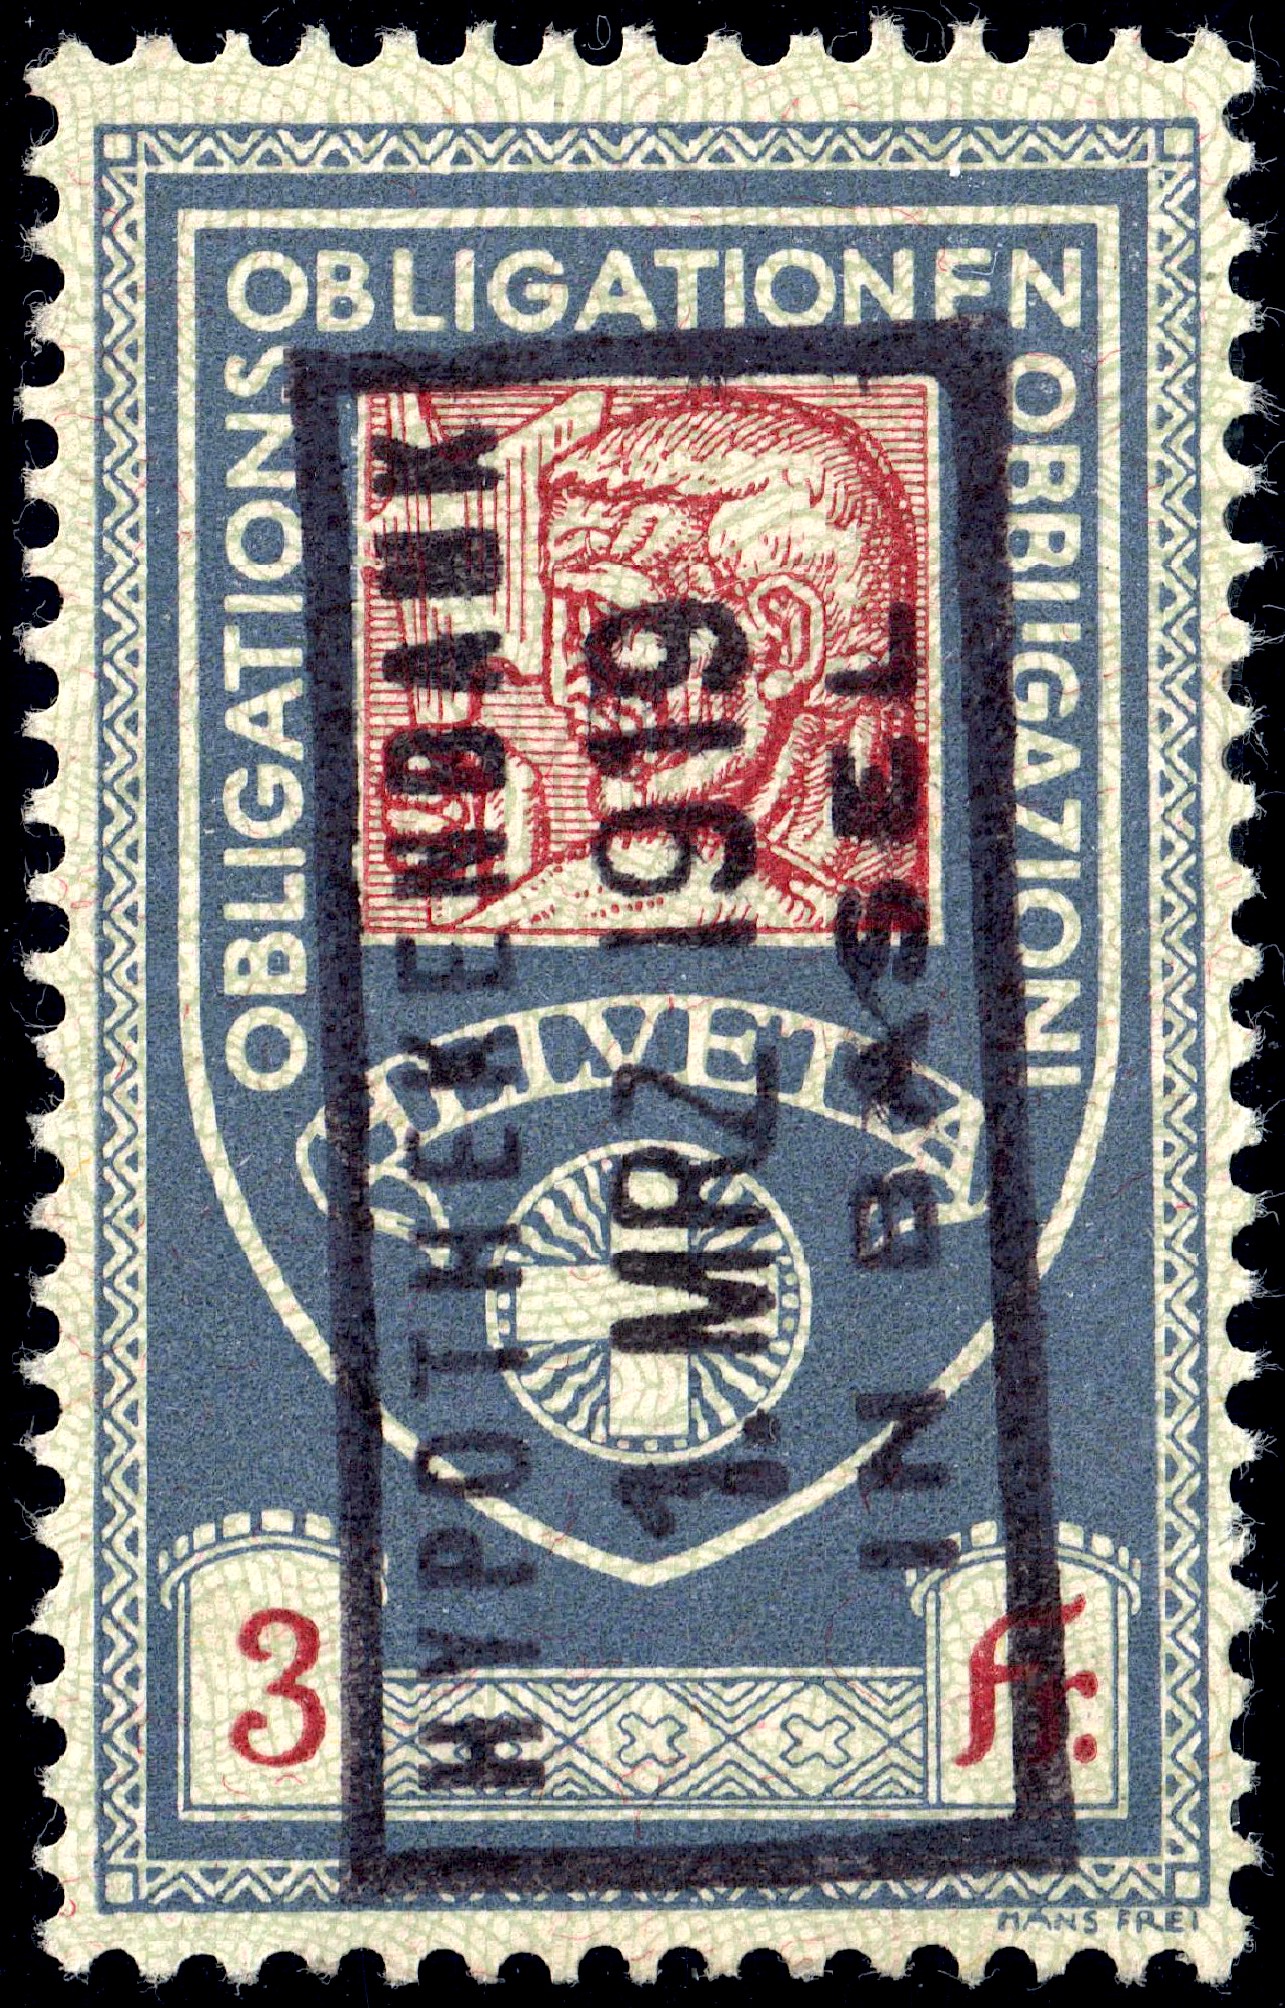 Switzerland federal bonds revenue 1915 3Fr - 8